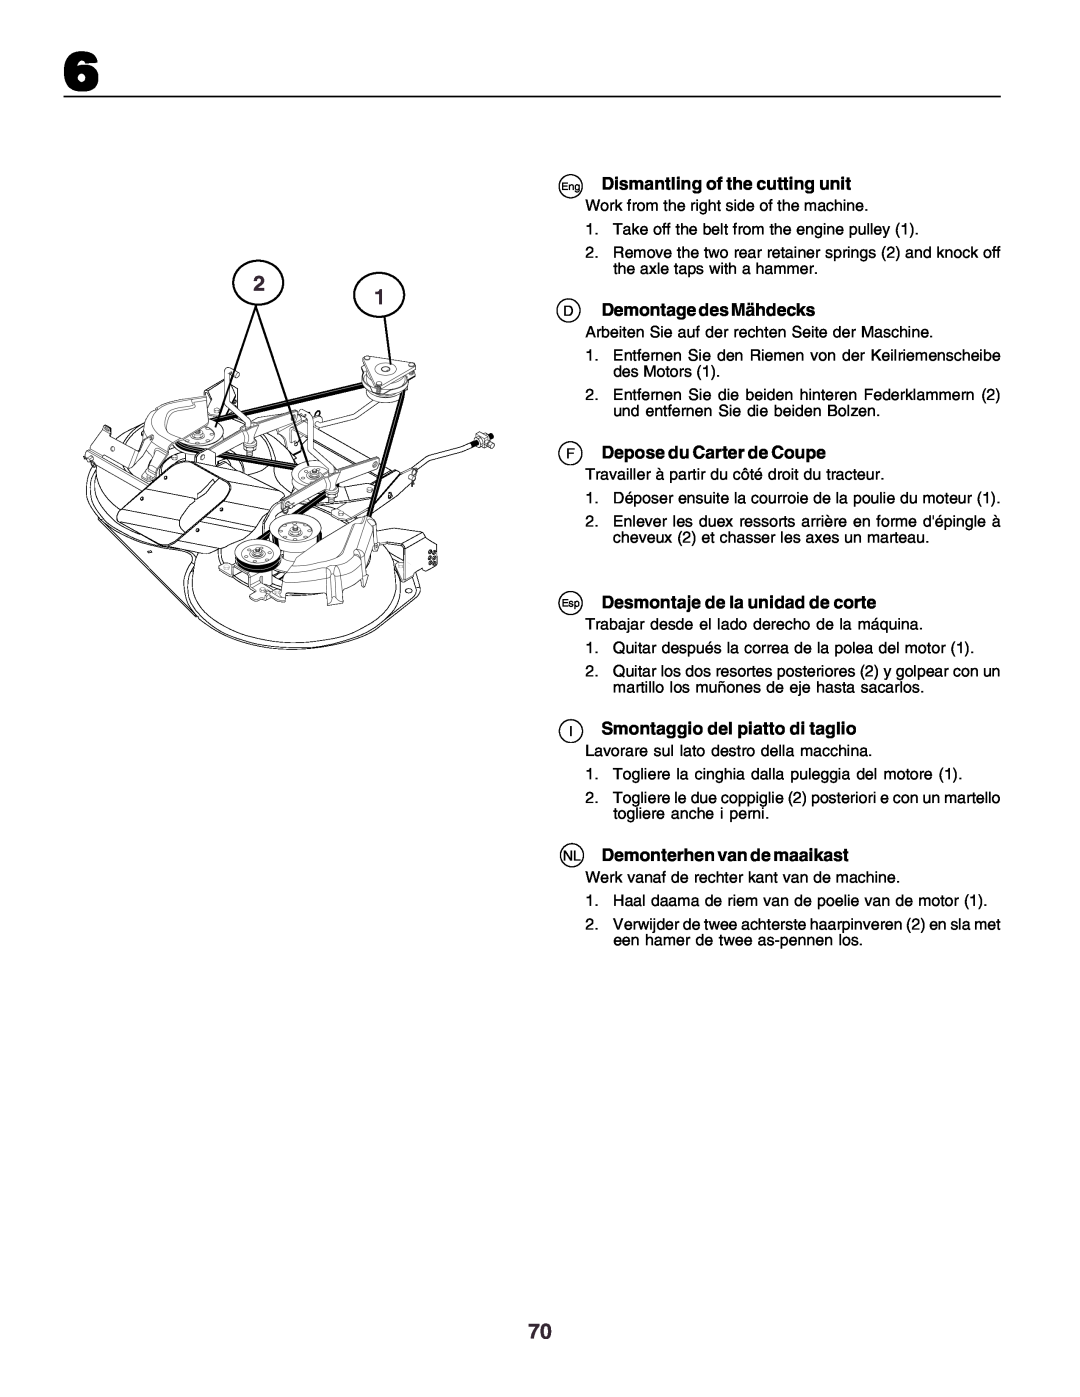 Husqvarna CT160 instruction manual Eng Dismantling of the cutting unit, D Demontage des Mähdecks, Depose du Carter de Coupe 